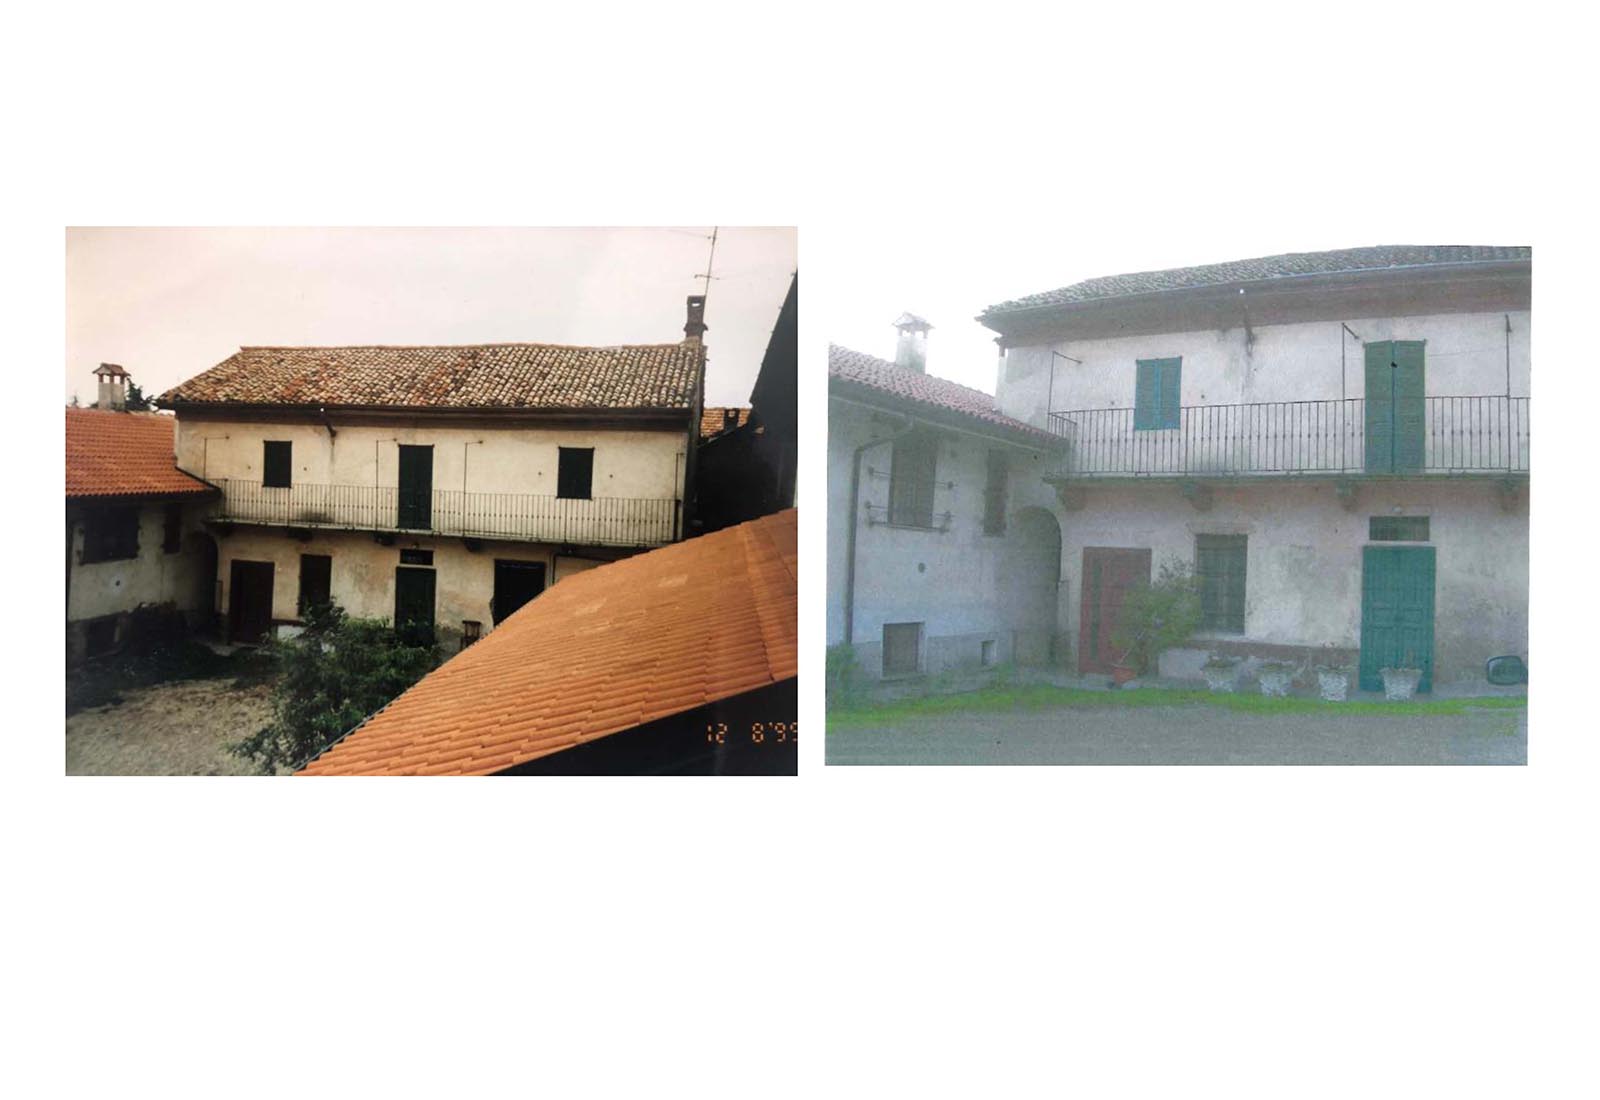 House in a courtyard in Bernate Ticino - Historical photos